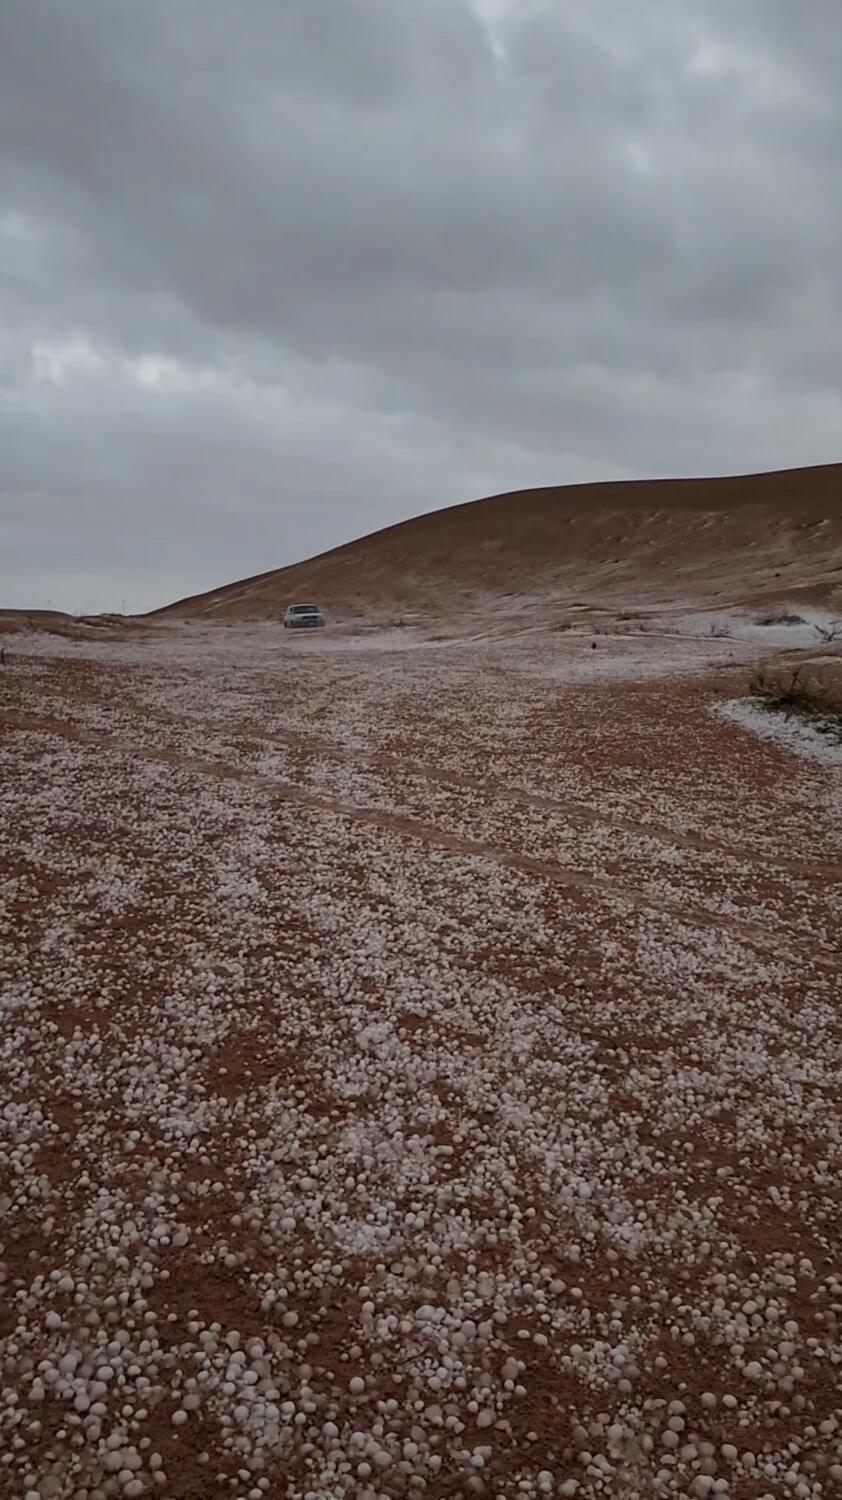 In the UAE, golf ball-sized hail fell